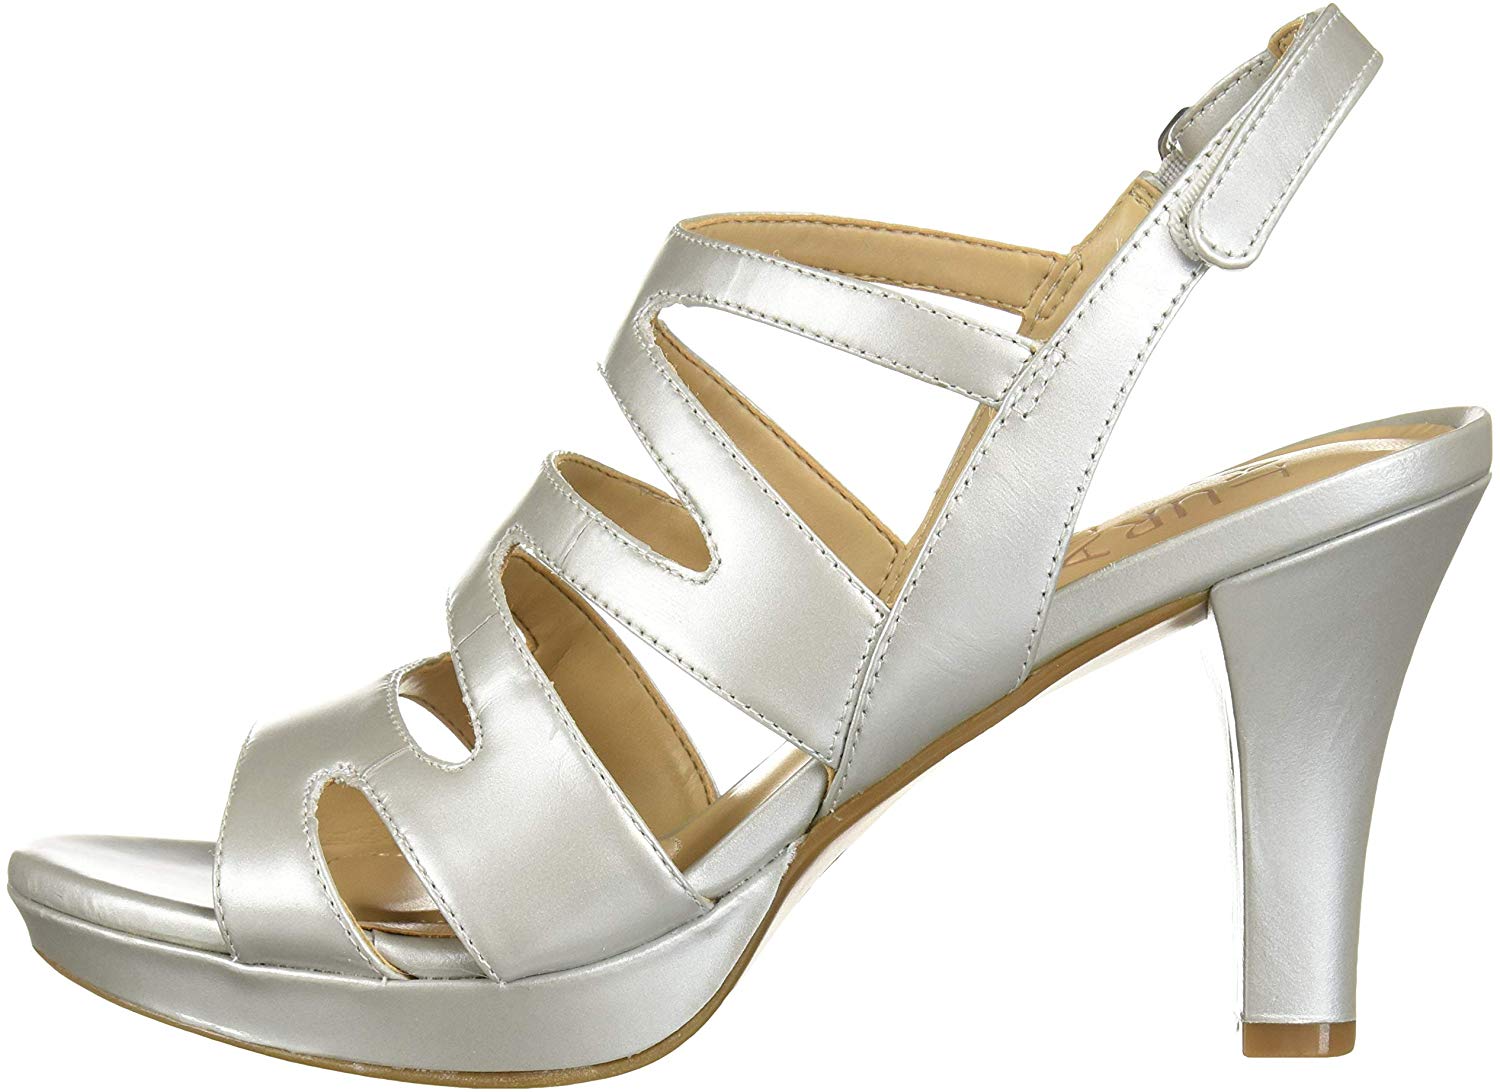 Naturalizer Womens Heeled Sandals in Silver Color, Size 7 EKP | eBay